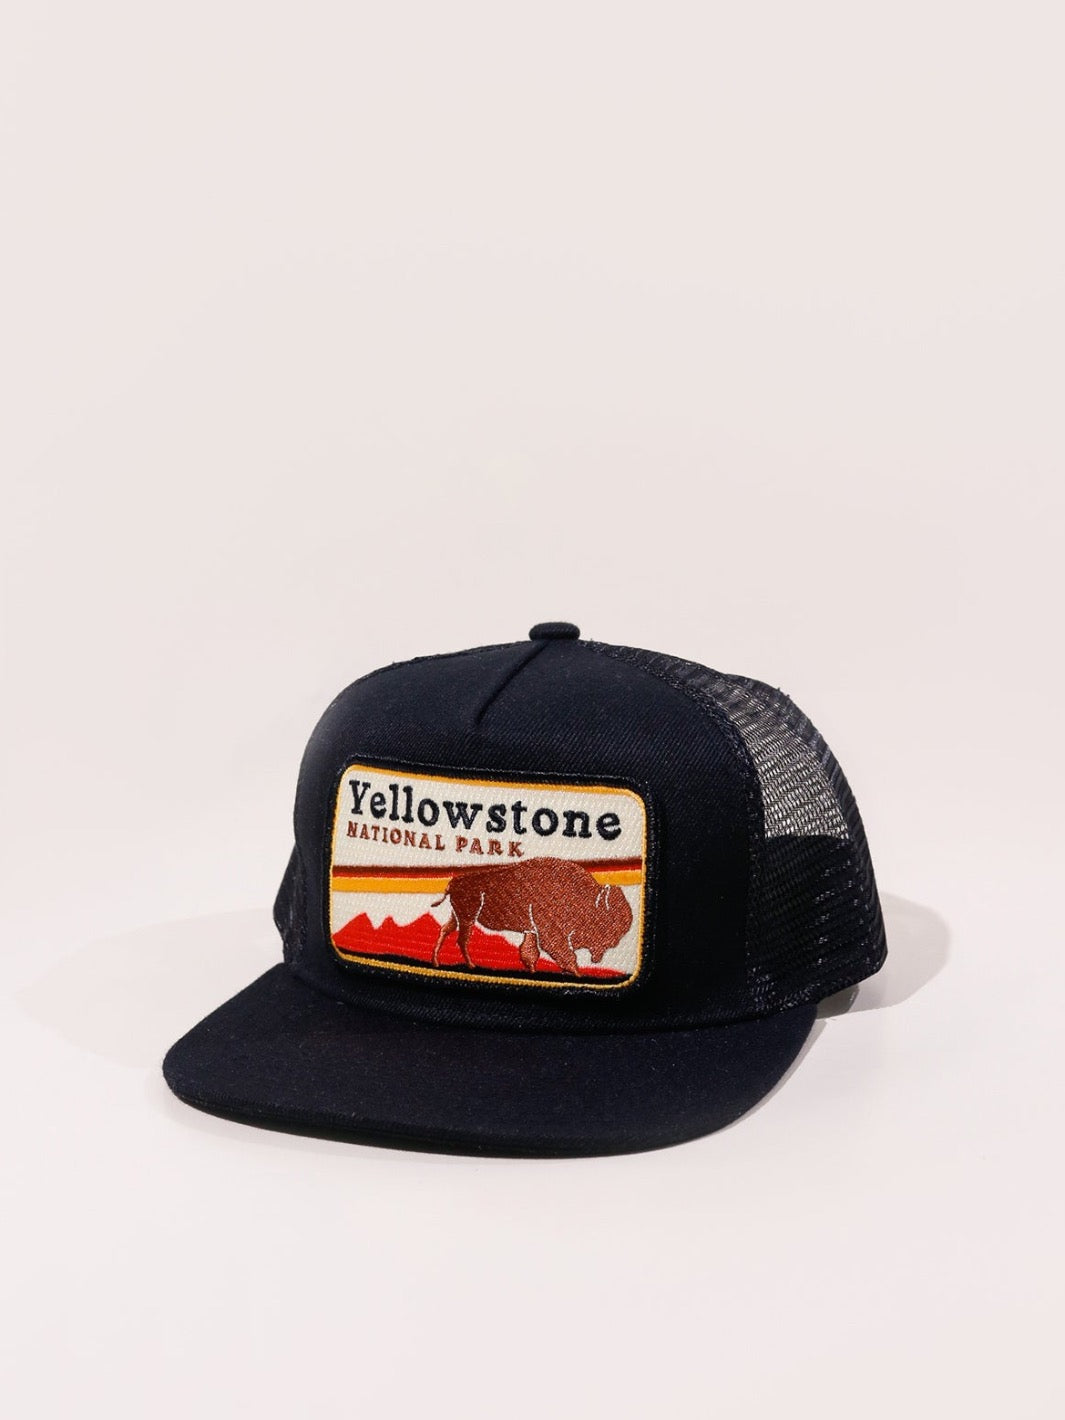 Yellowstone Pocket Patch Trucker Hat - Heyday Bozeman